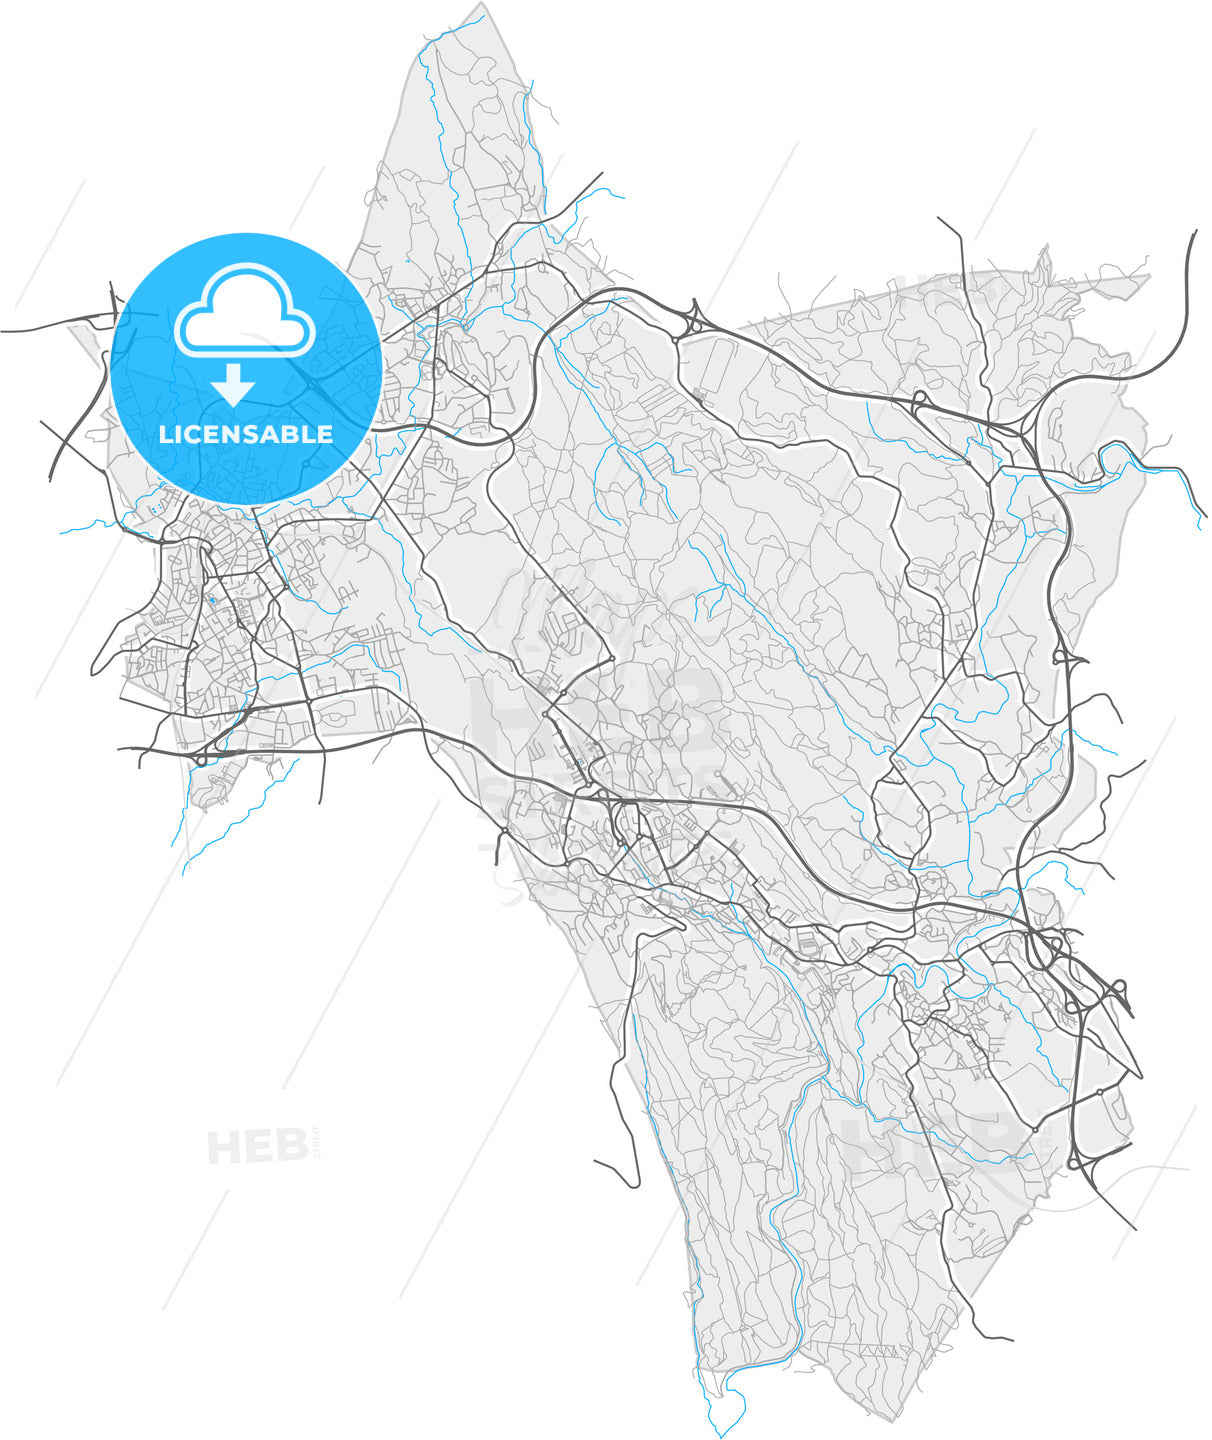 Valongo, Porto, Portugal, high quality vector map